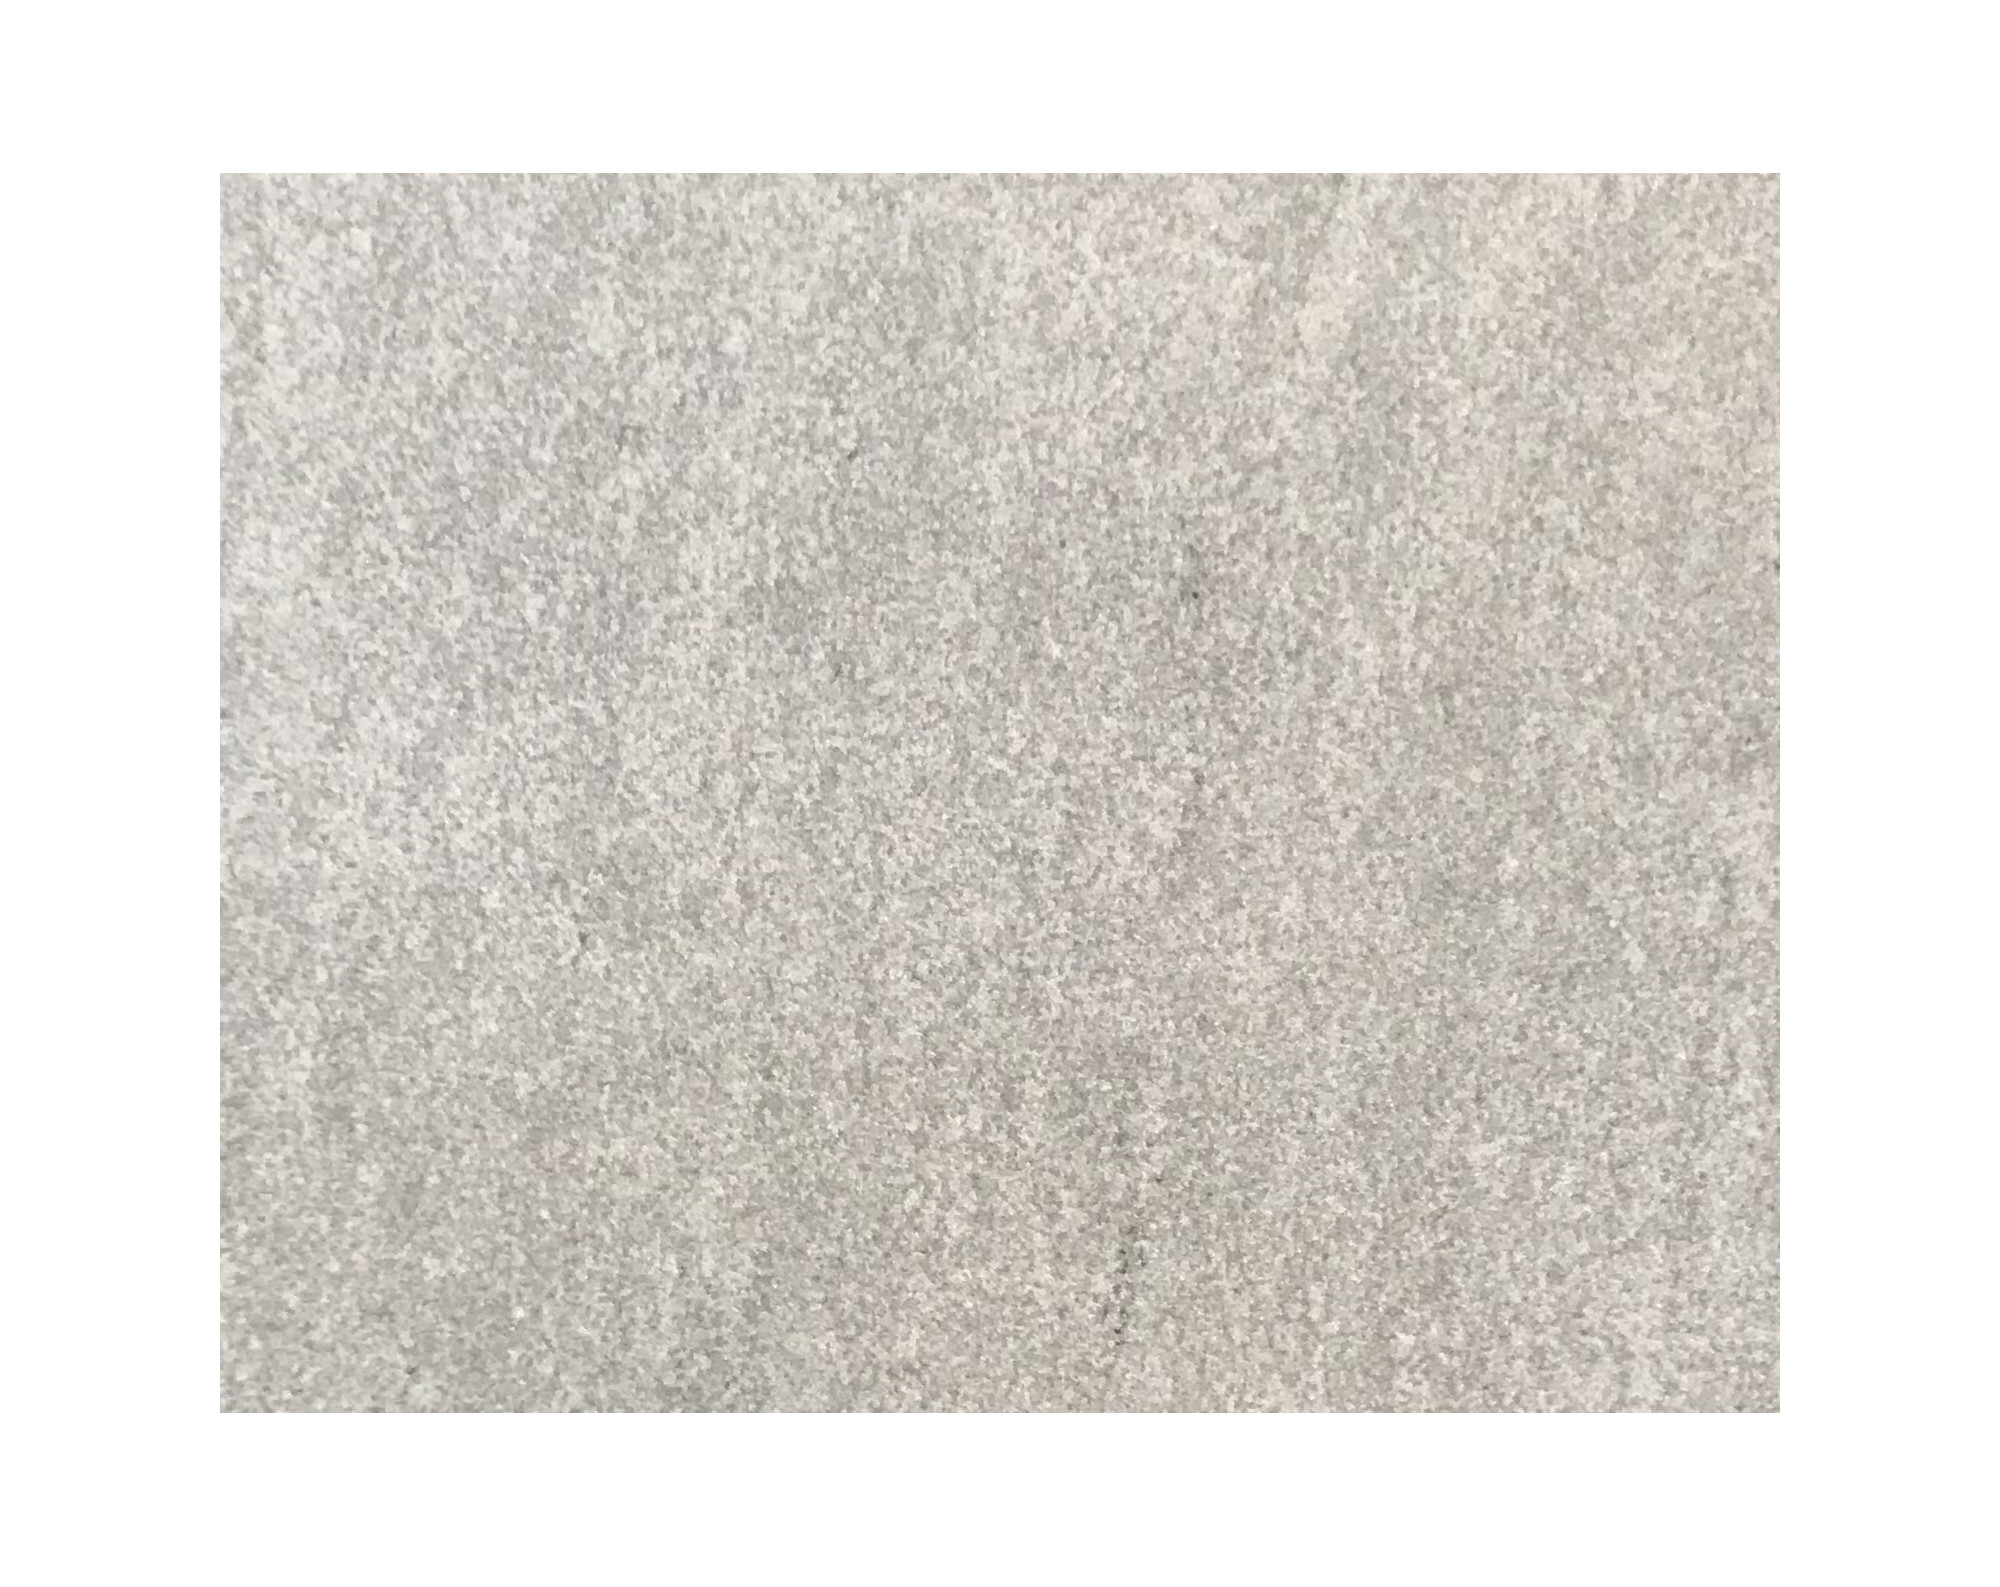 Harmo roc maranelloset, keramiek-serie, 8-vormig d:4,20mx6,60m, zand grijs, keramisch porselein